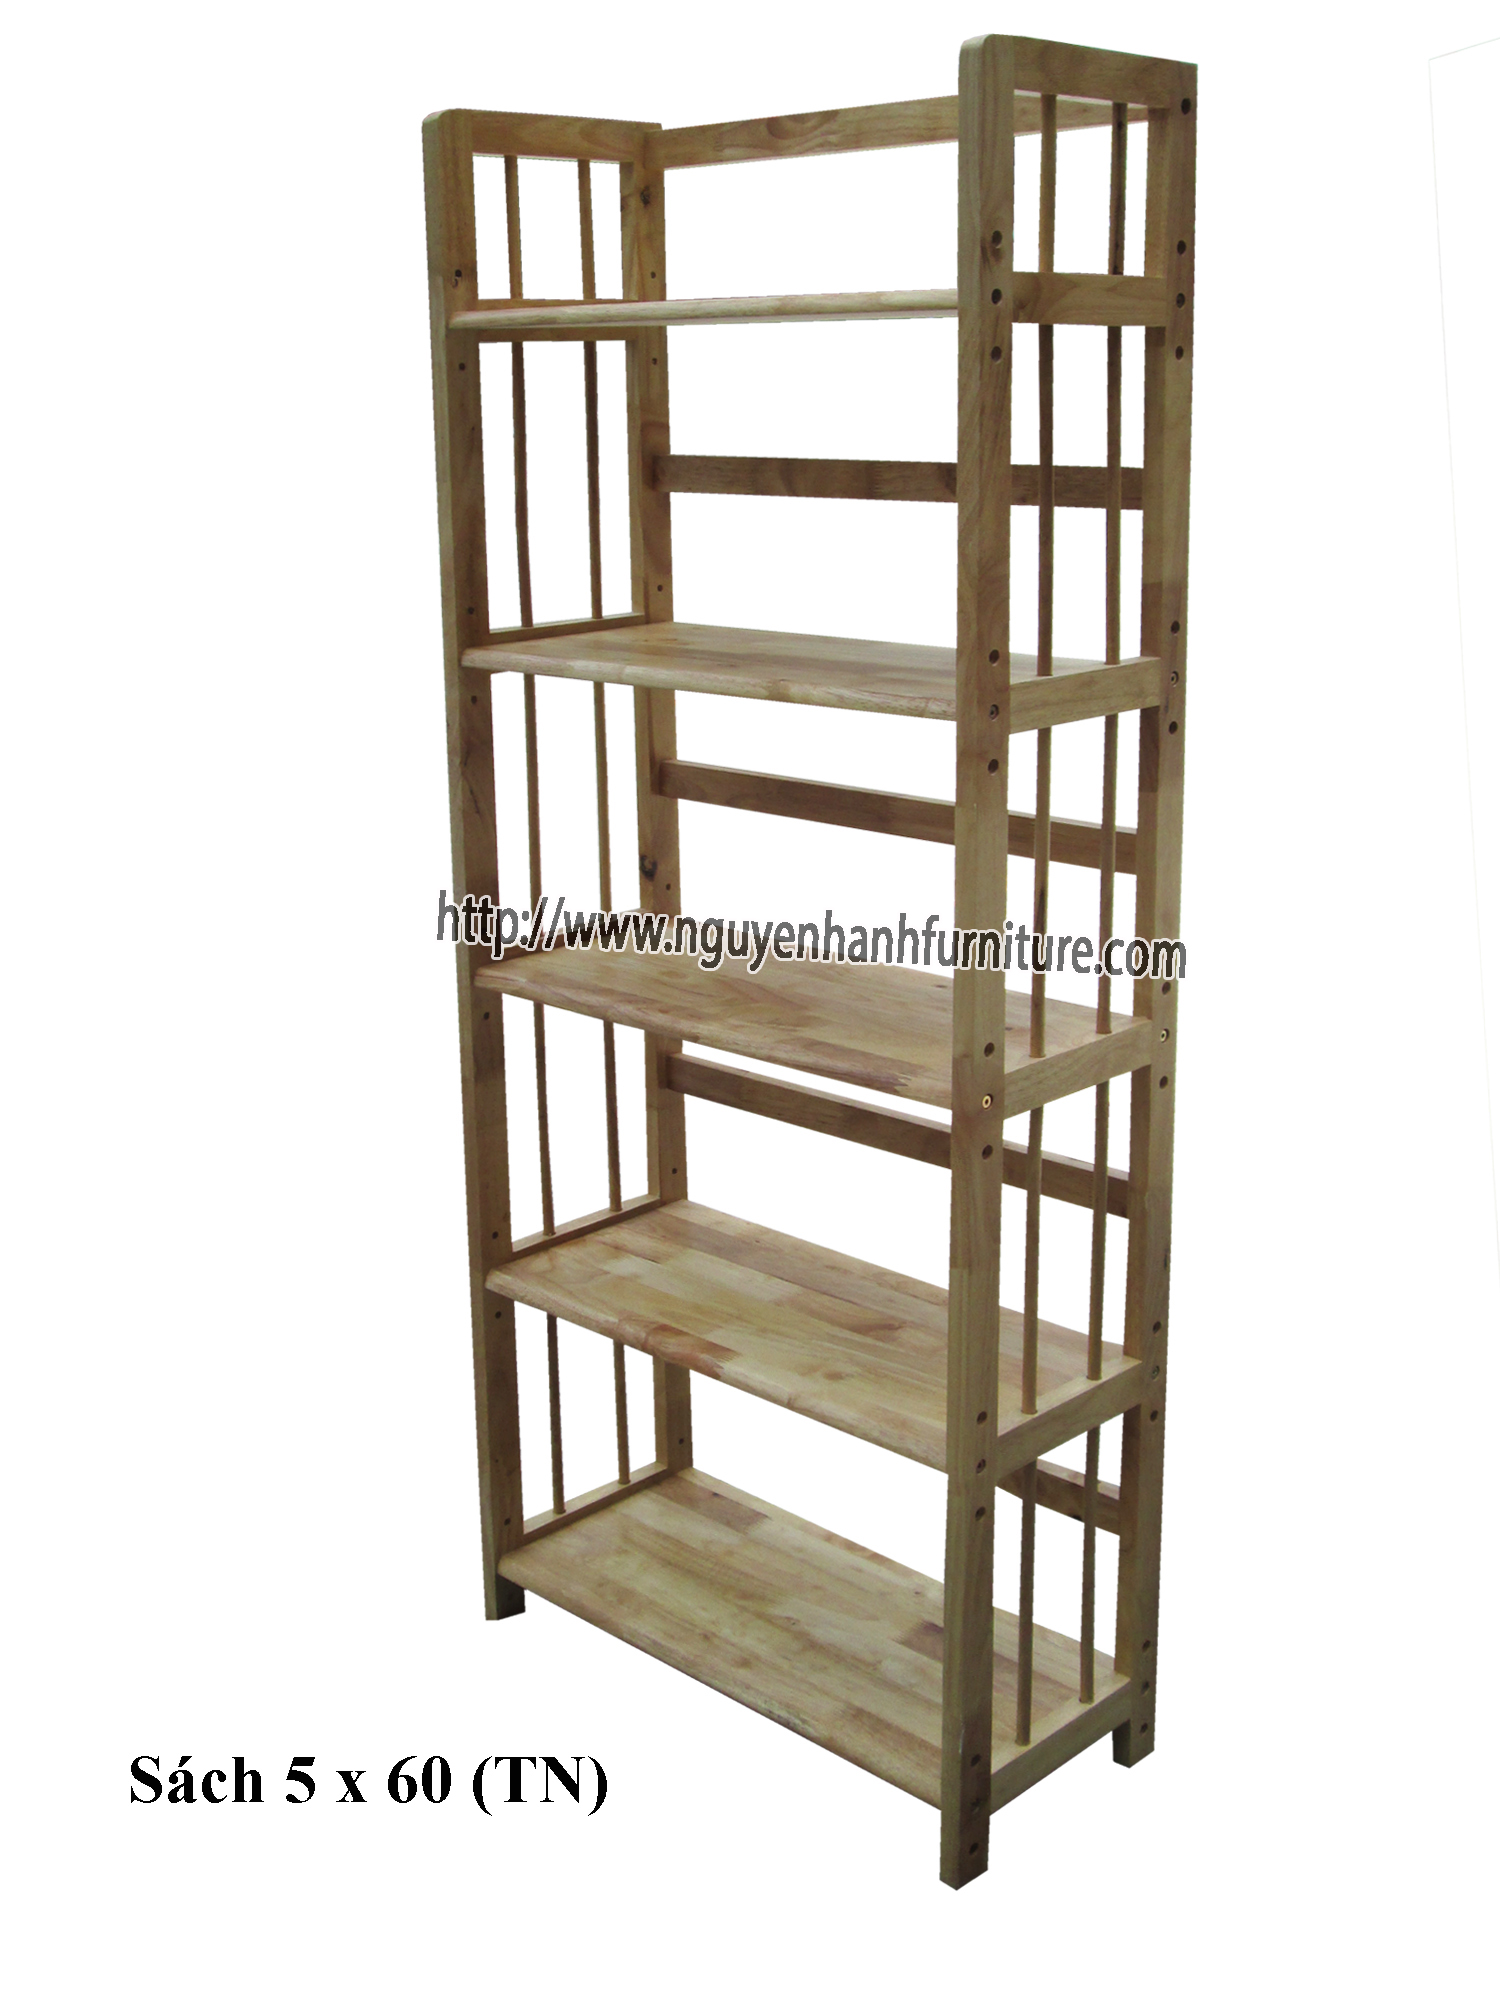 Name product: 5 storey Adjustable Bookshelf 60 (Natural) - Dimensions: 63 x 28 x 157 (H) - Description: Wood natural rubber